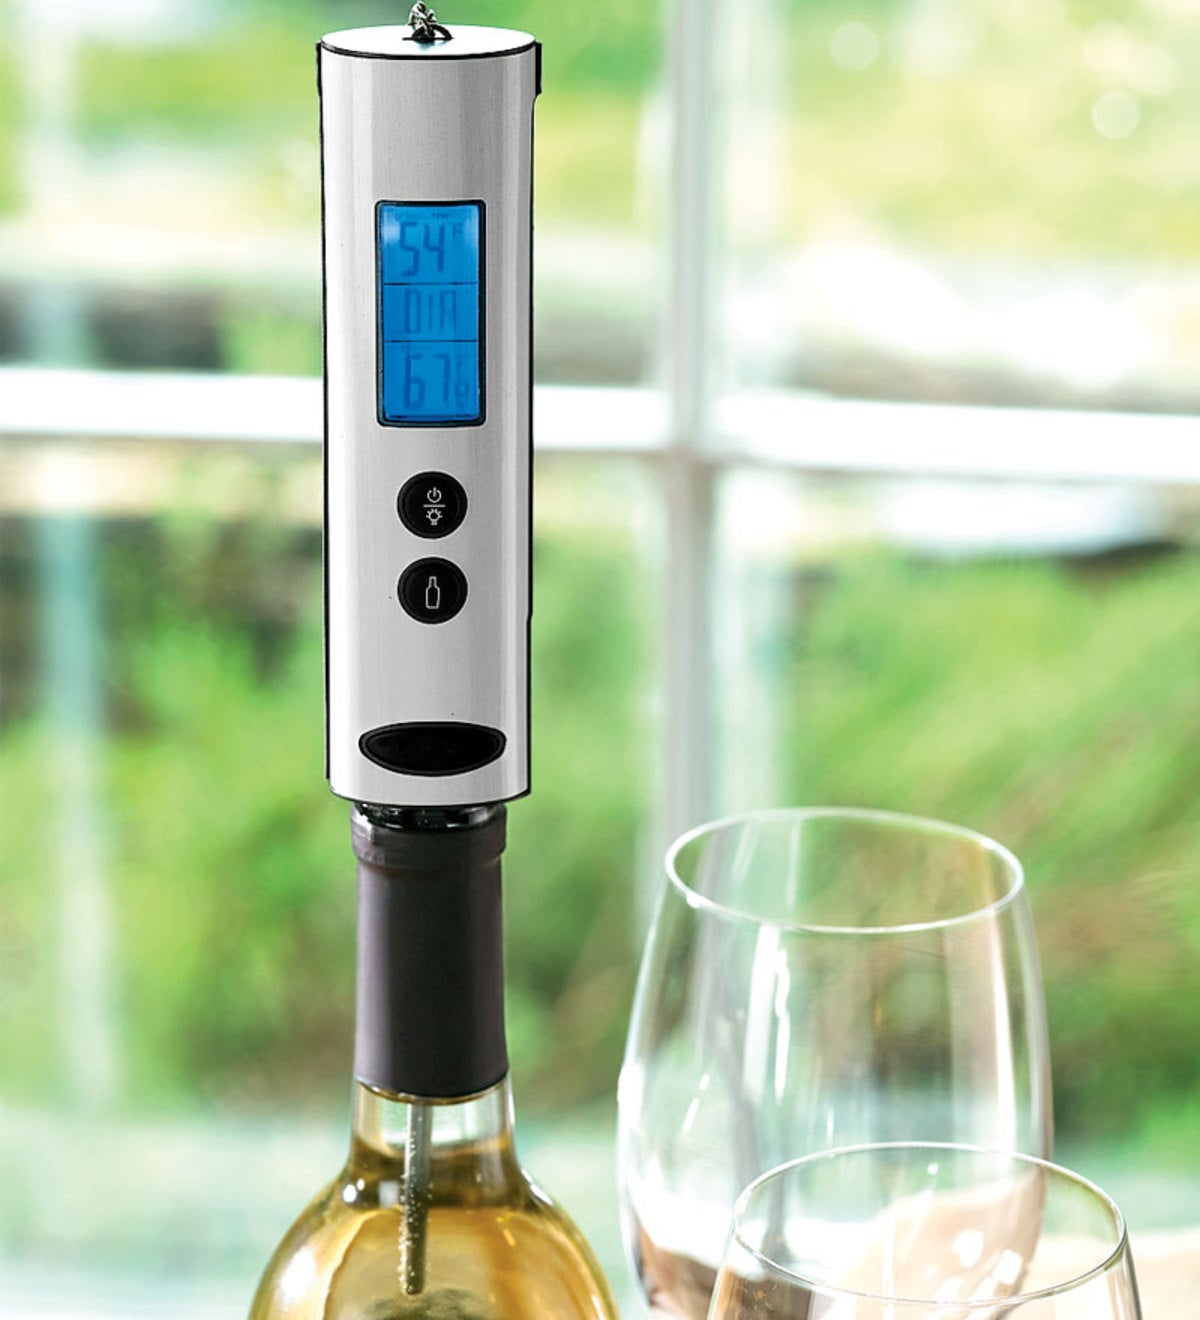 Deluxe Wine Bottle Thermometer – Splash Wines